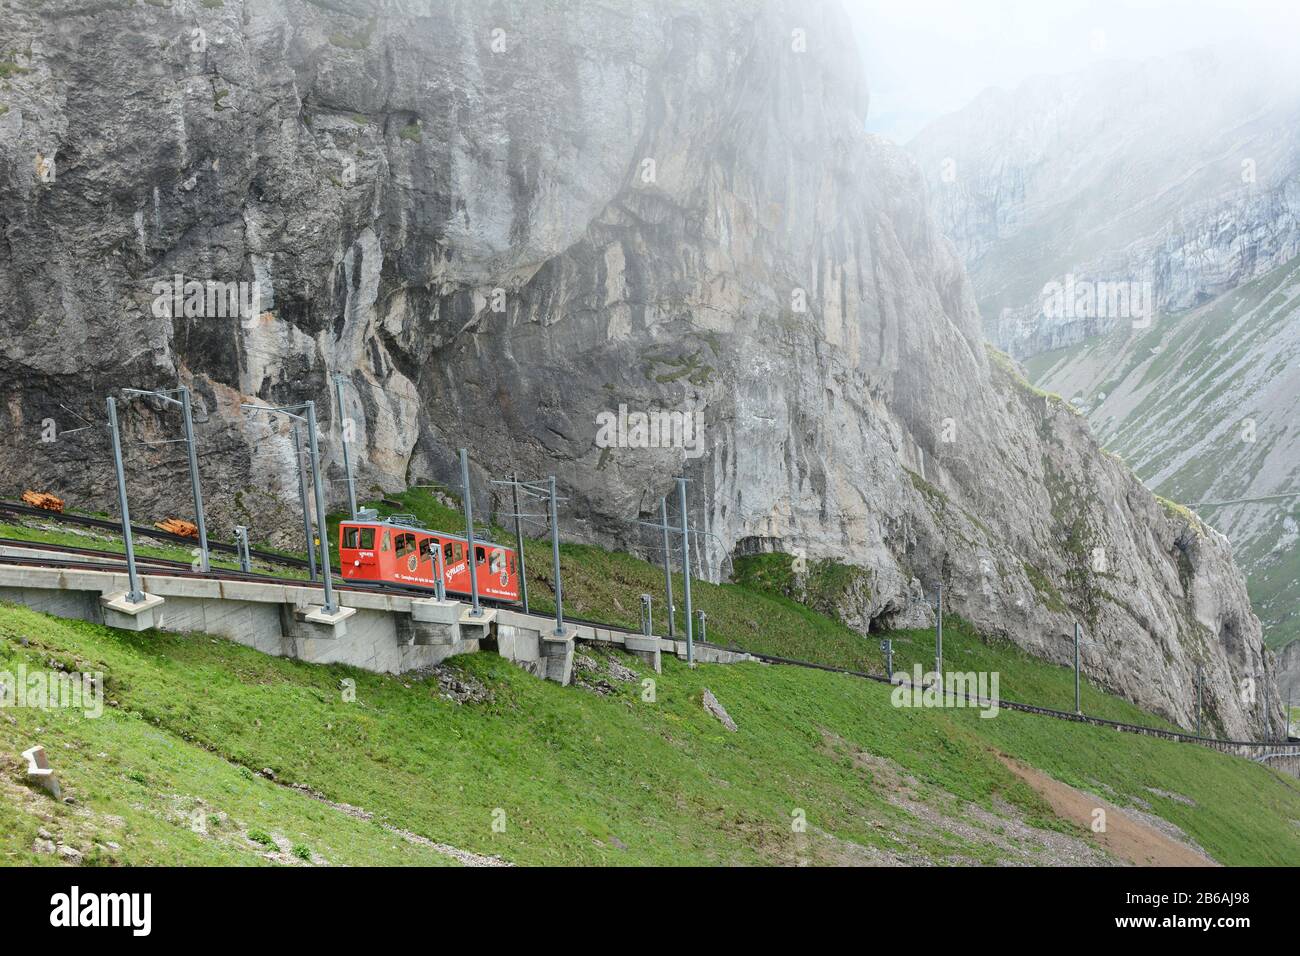 ALPNACHSTAD, SWITZERLAND - July 3, 2014: The Pilatus-Bahn, the world's steepest cogwheel railway nears the top of Mount Pilatus as it emerges from the Stock Photo